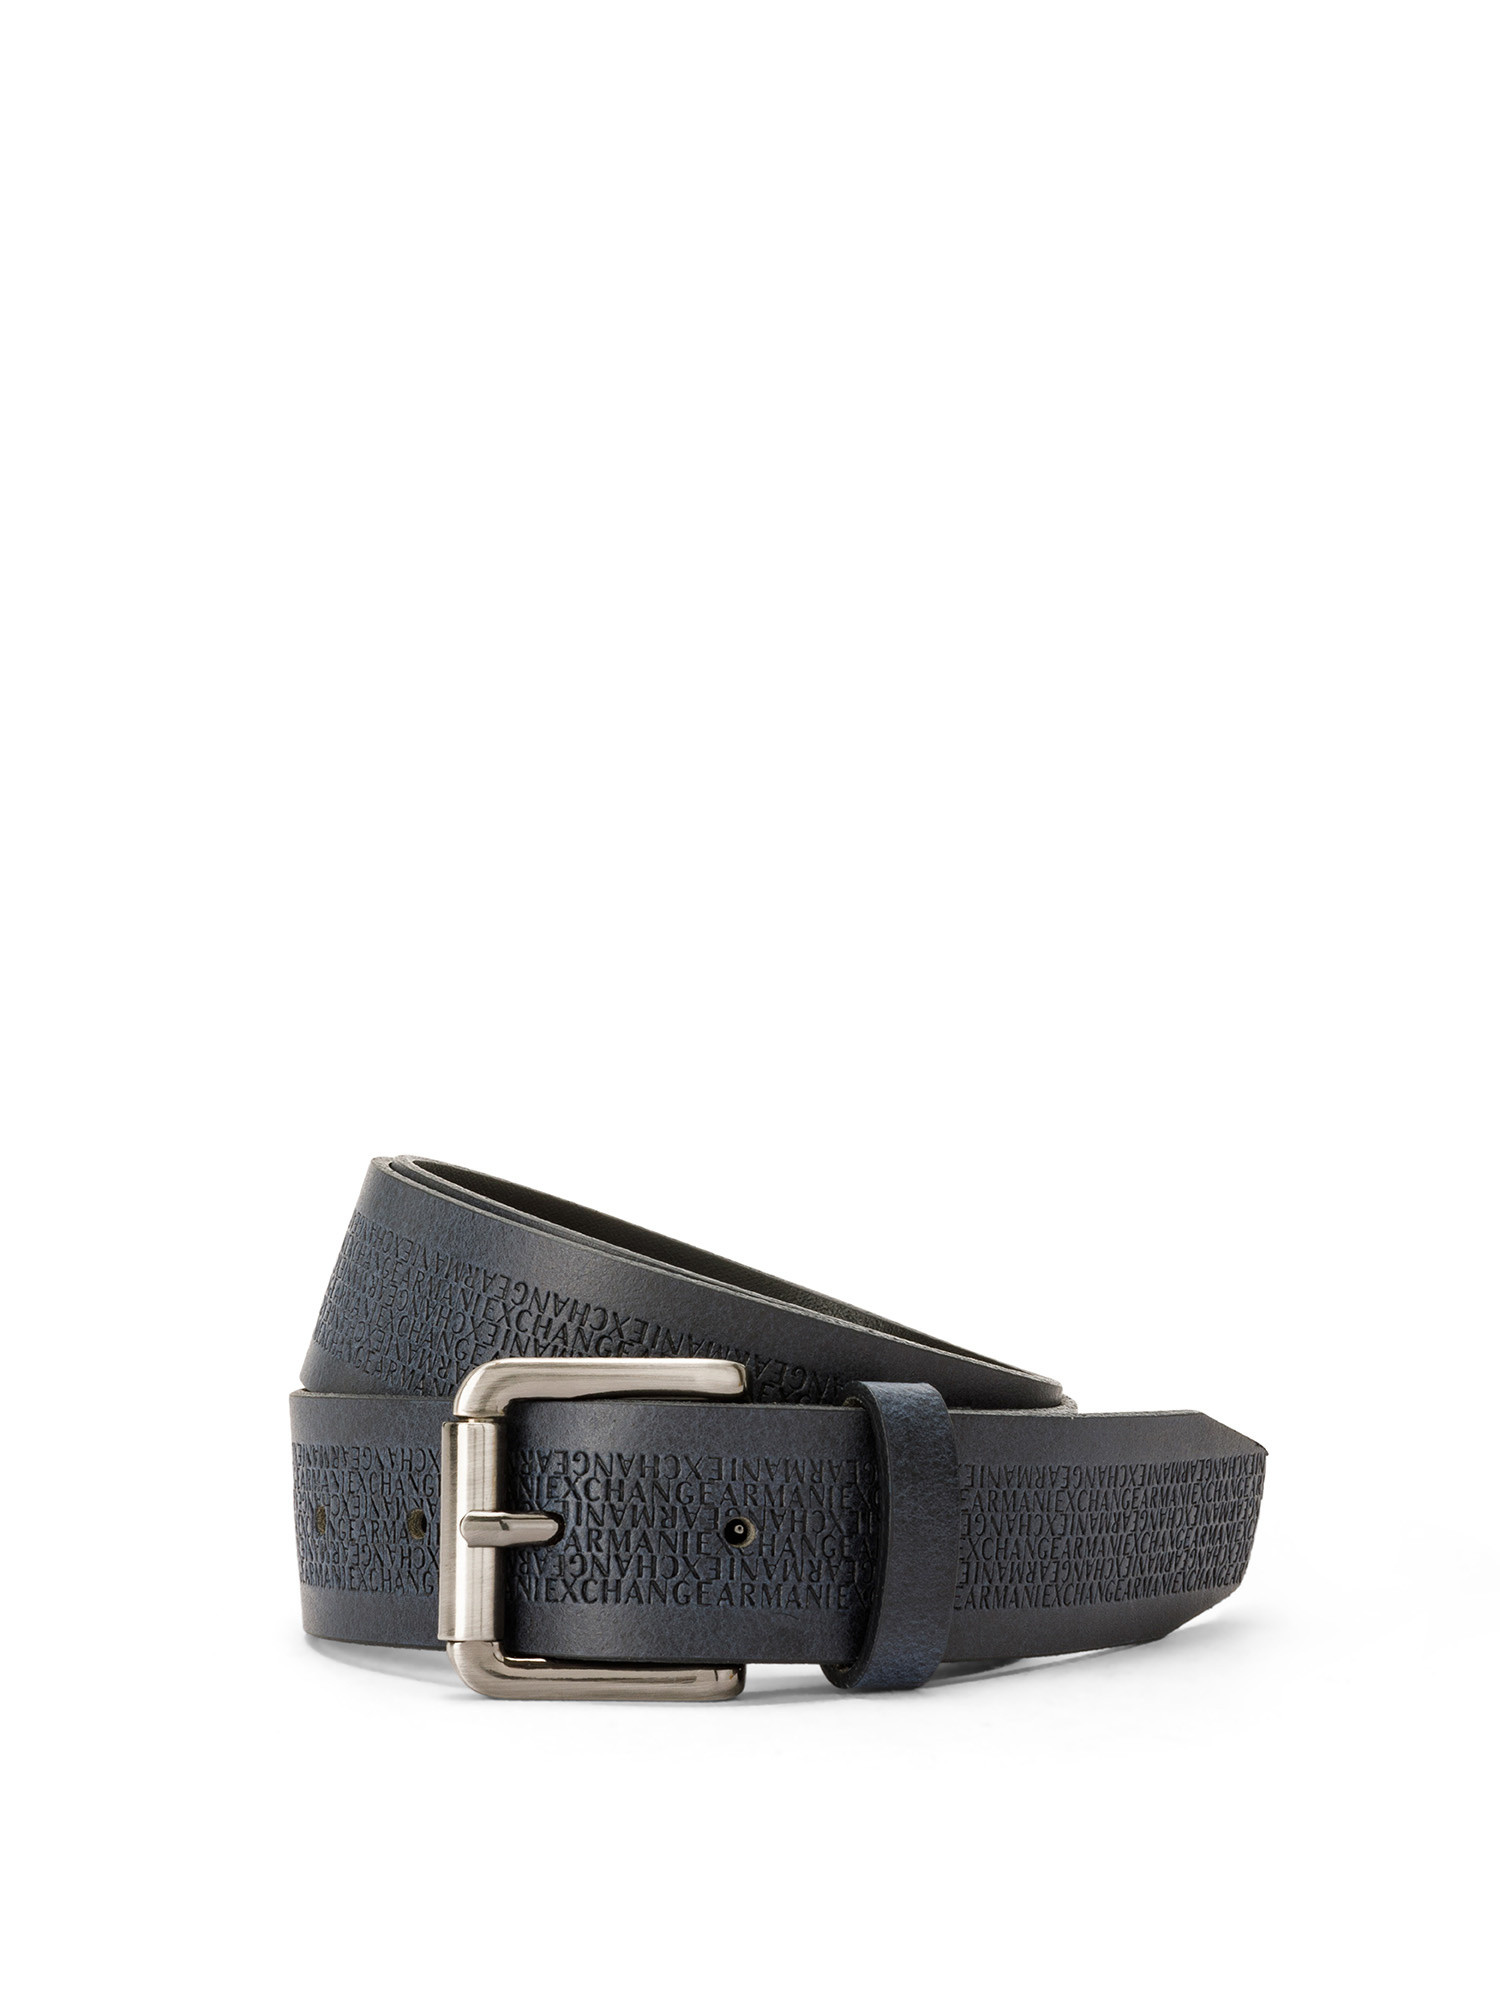 Armani Exchange - Cintura in pelle con logo, Blu scuro, large image number 0